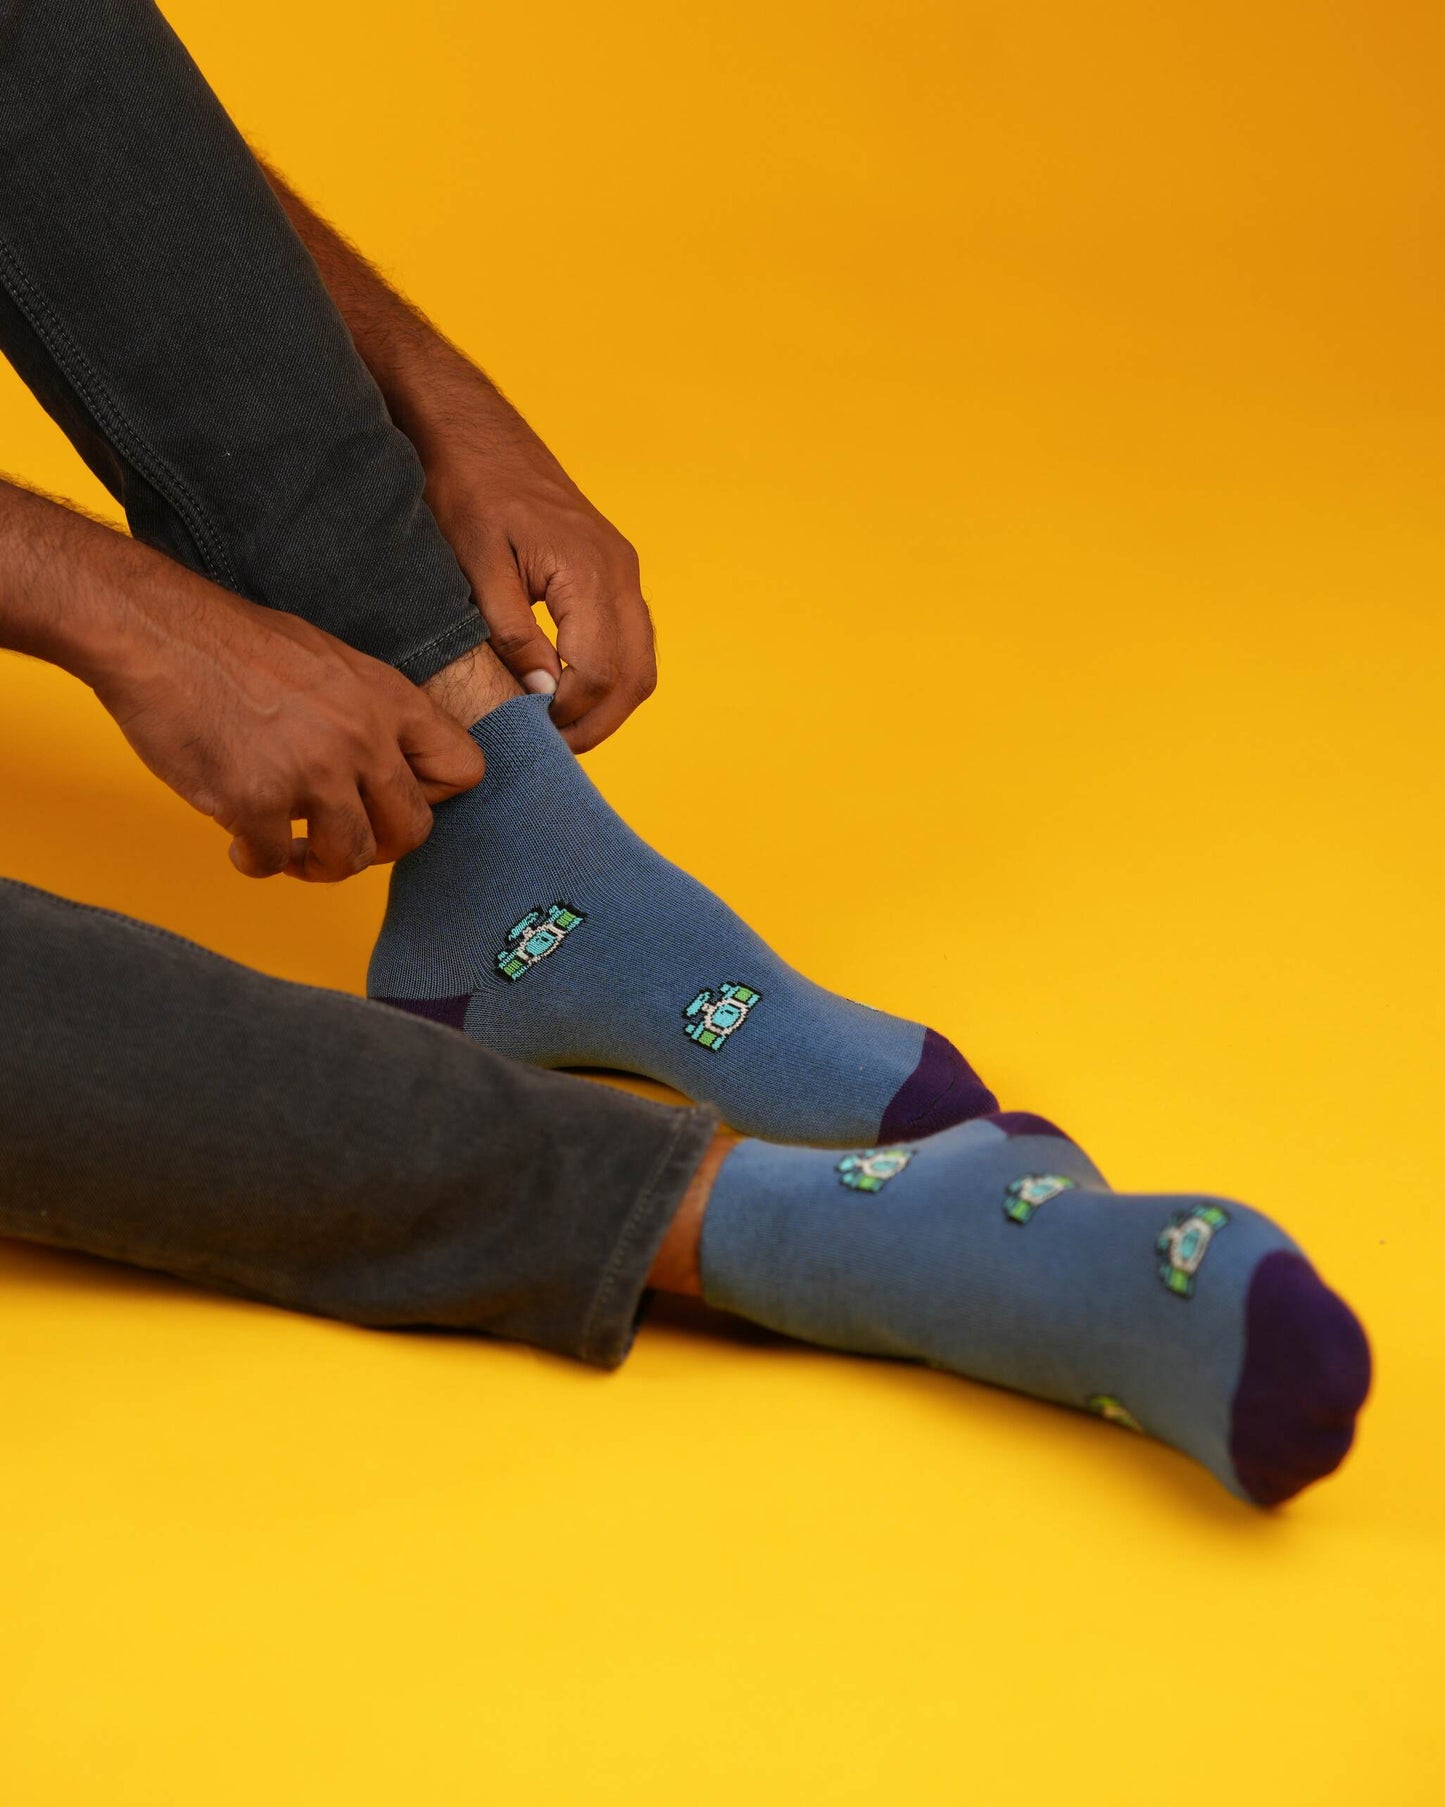 Shutterbug Blue Socks